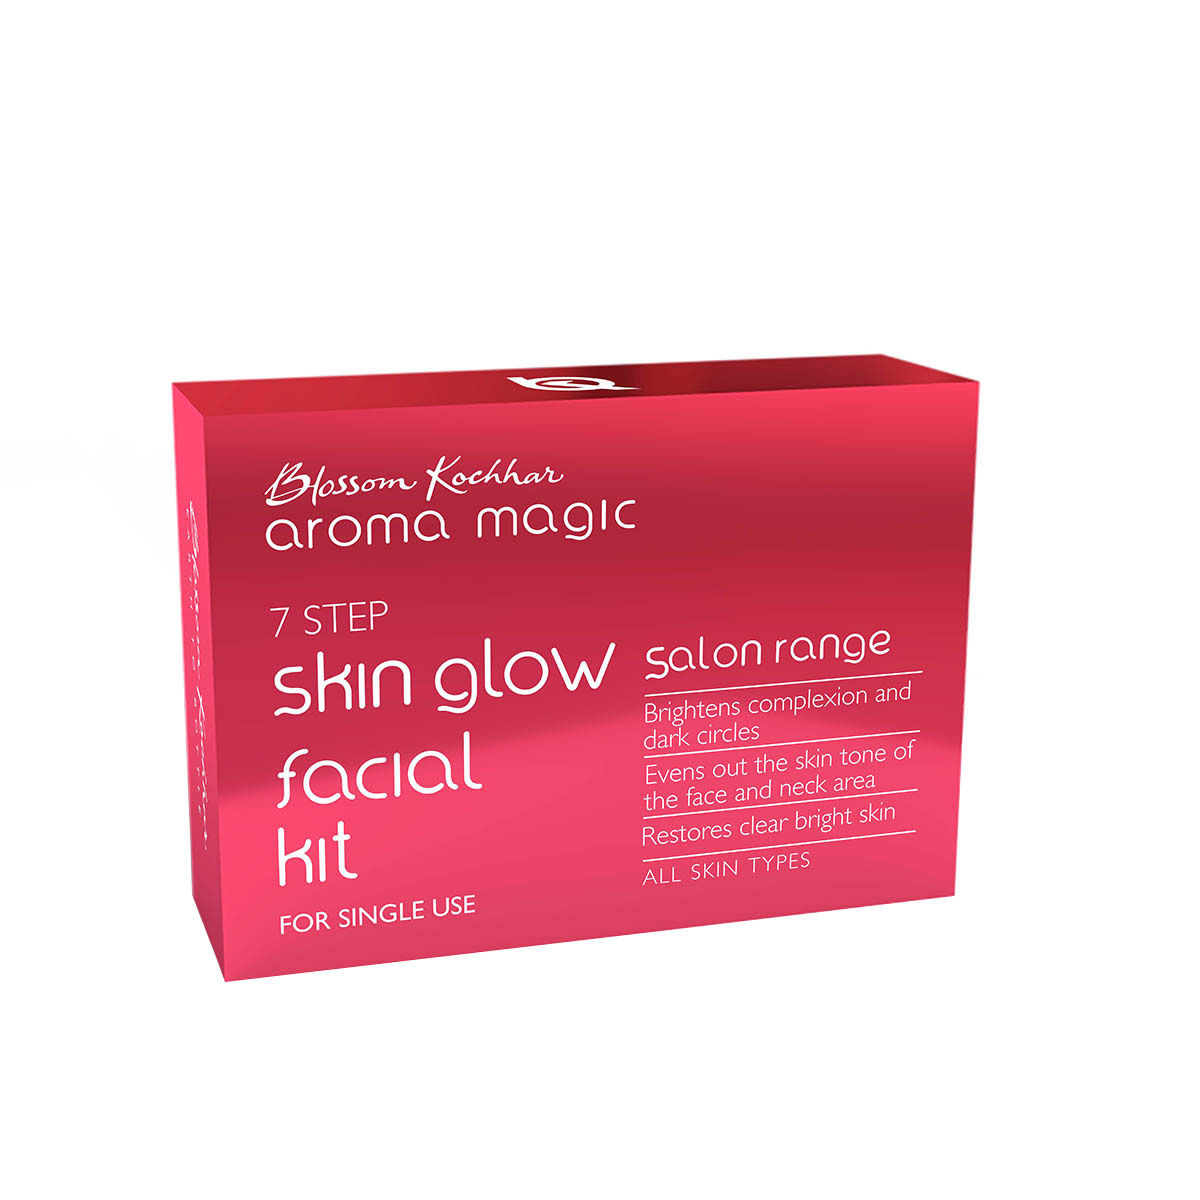 Aroma Magic Skin Glow Facial Kit for Single Use